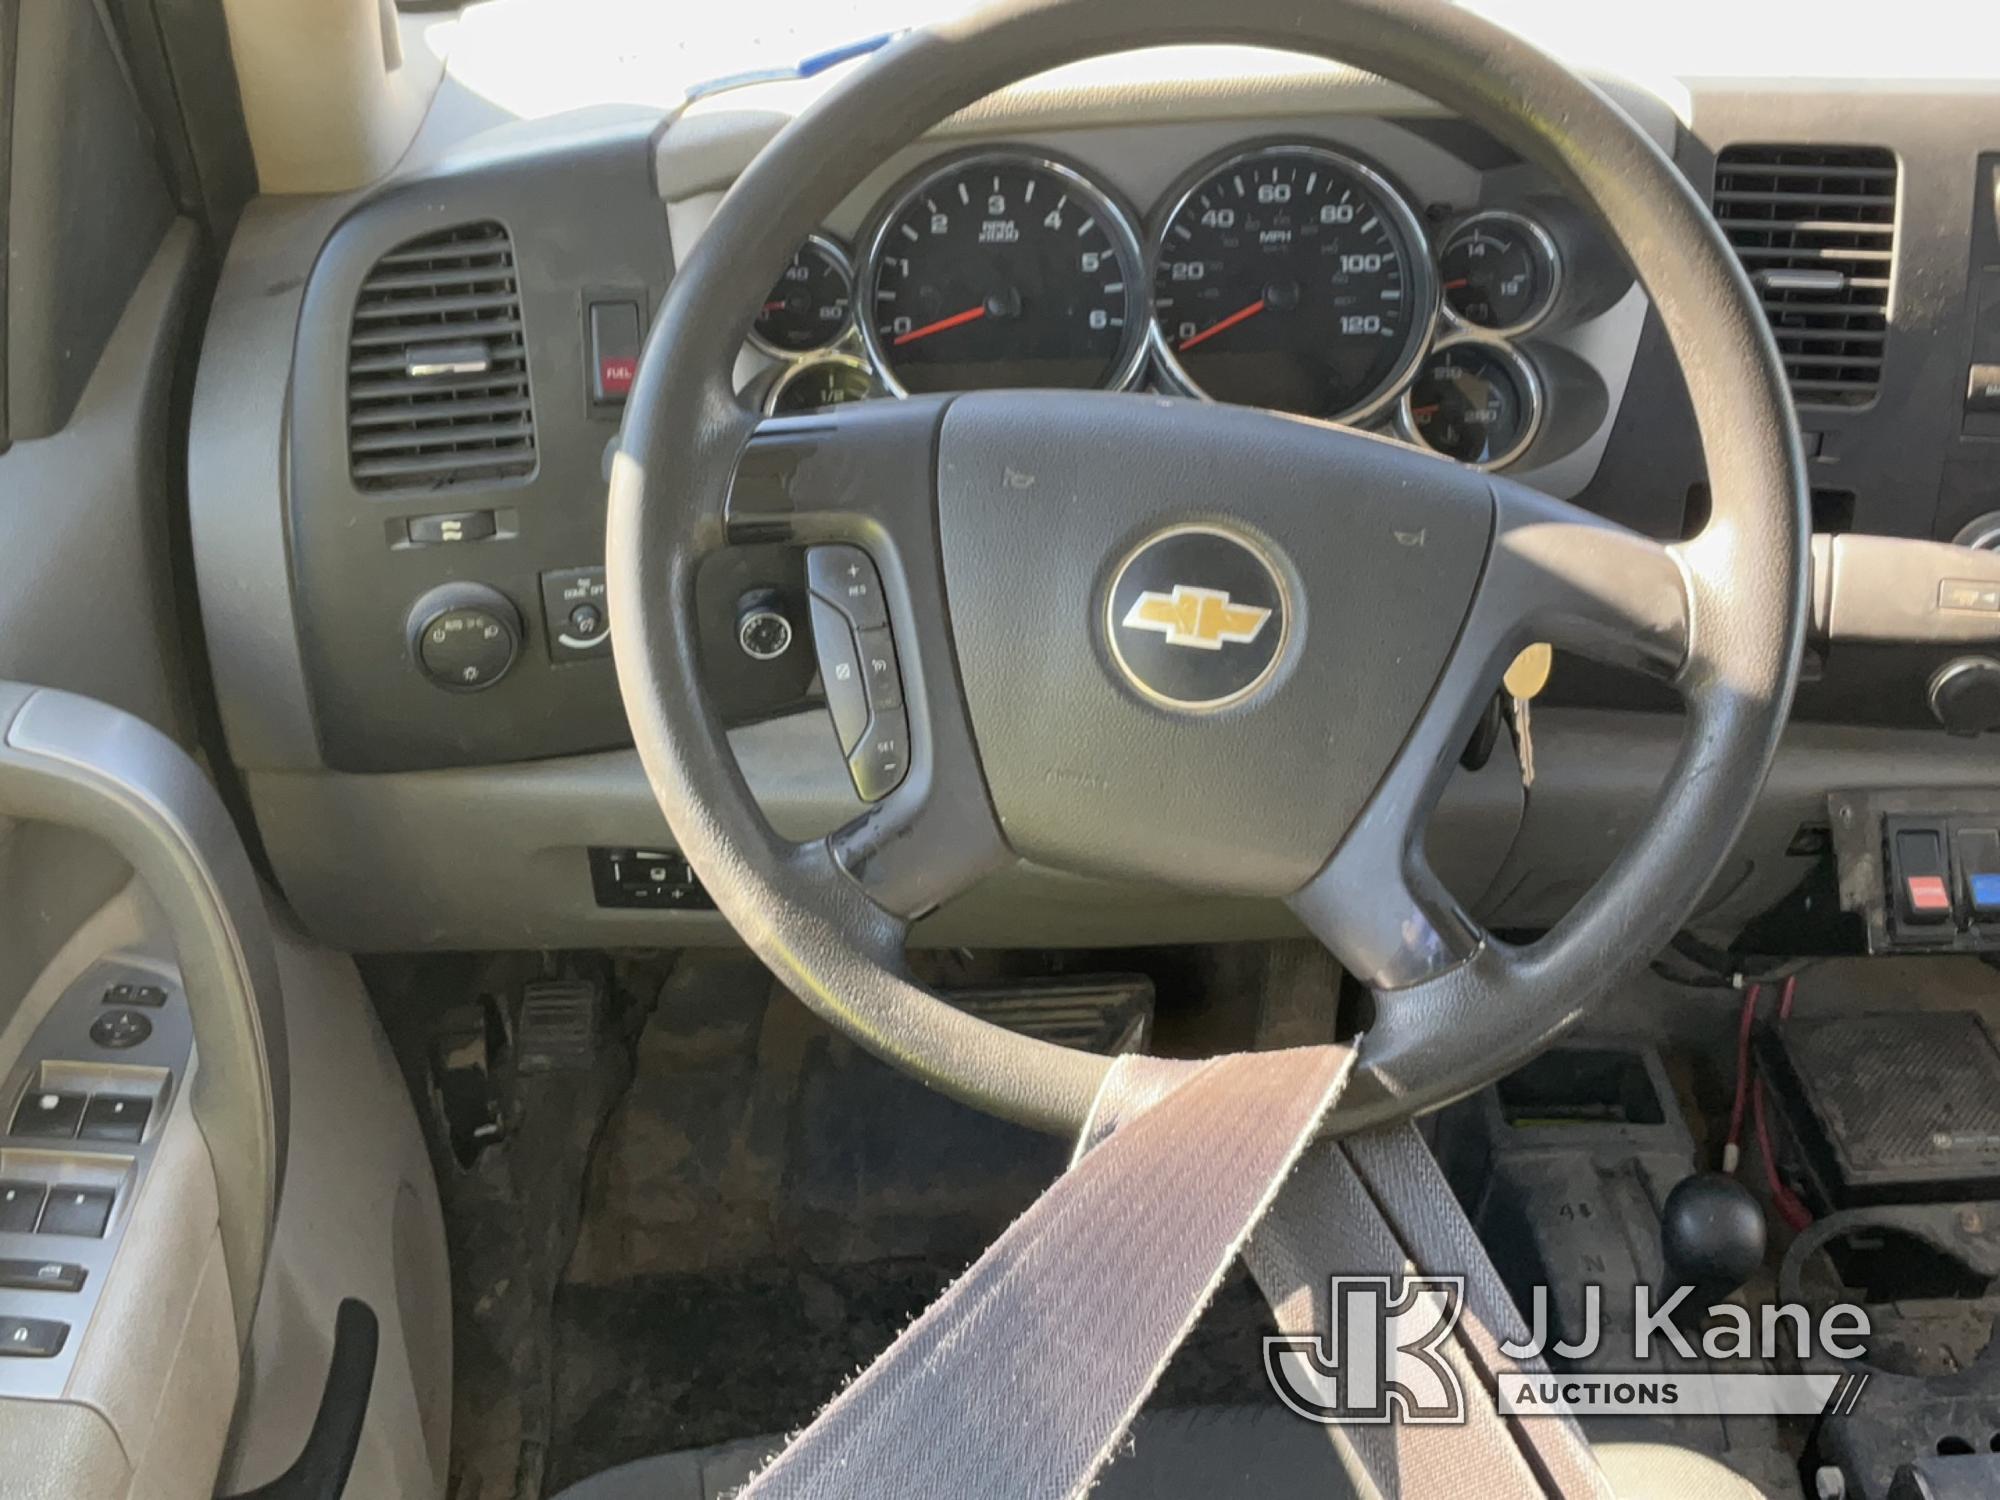 (South Beloit, IL) 2012 Chevrolet Silverado 2500HD 4x4 Extended-Cab Pickup Truck Not Running, Condit